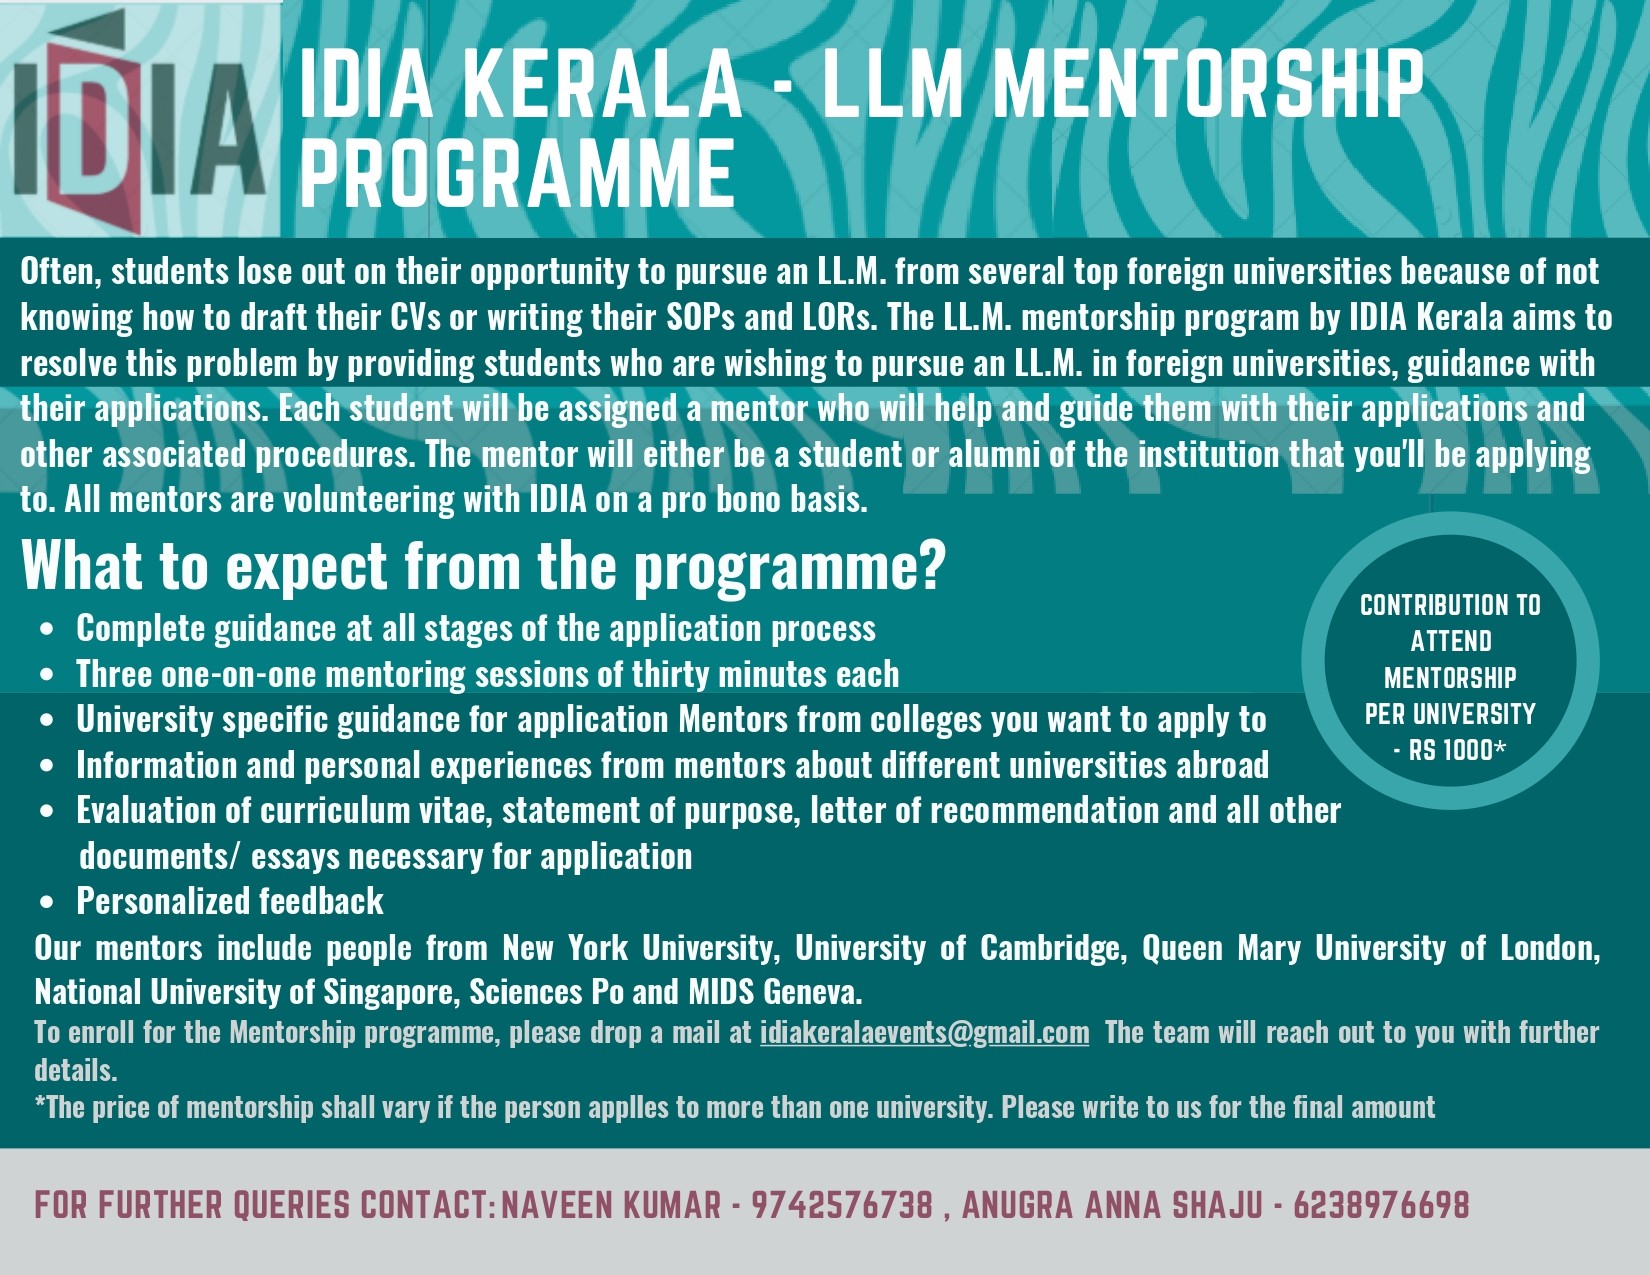 IDIA Kerala: LLM Mentorship Programme